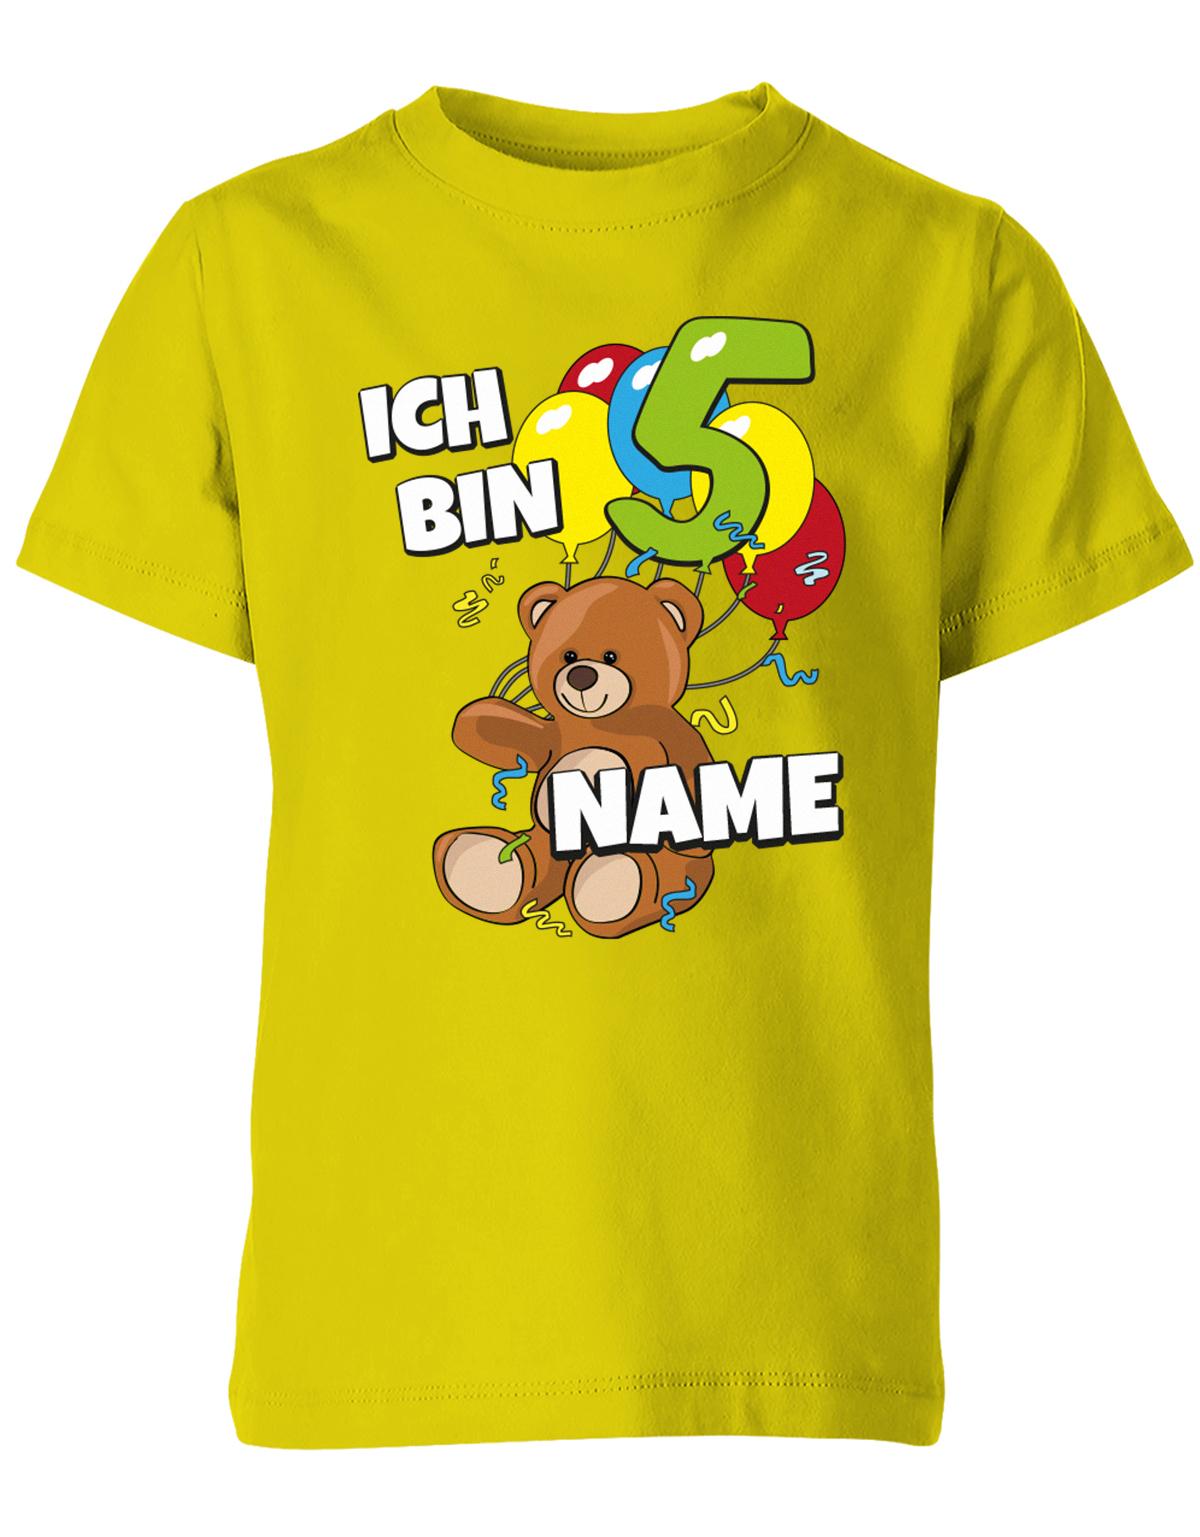 ich-bin-5-teddy-luftballons-kinder-shirt-gelb